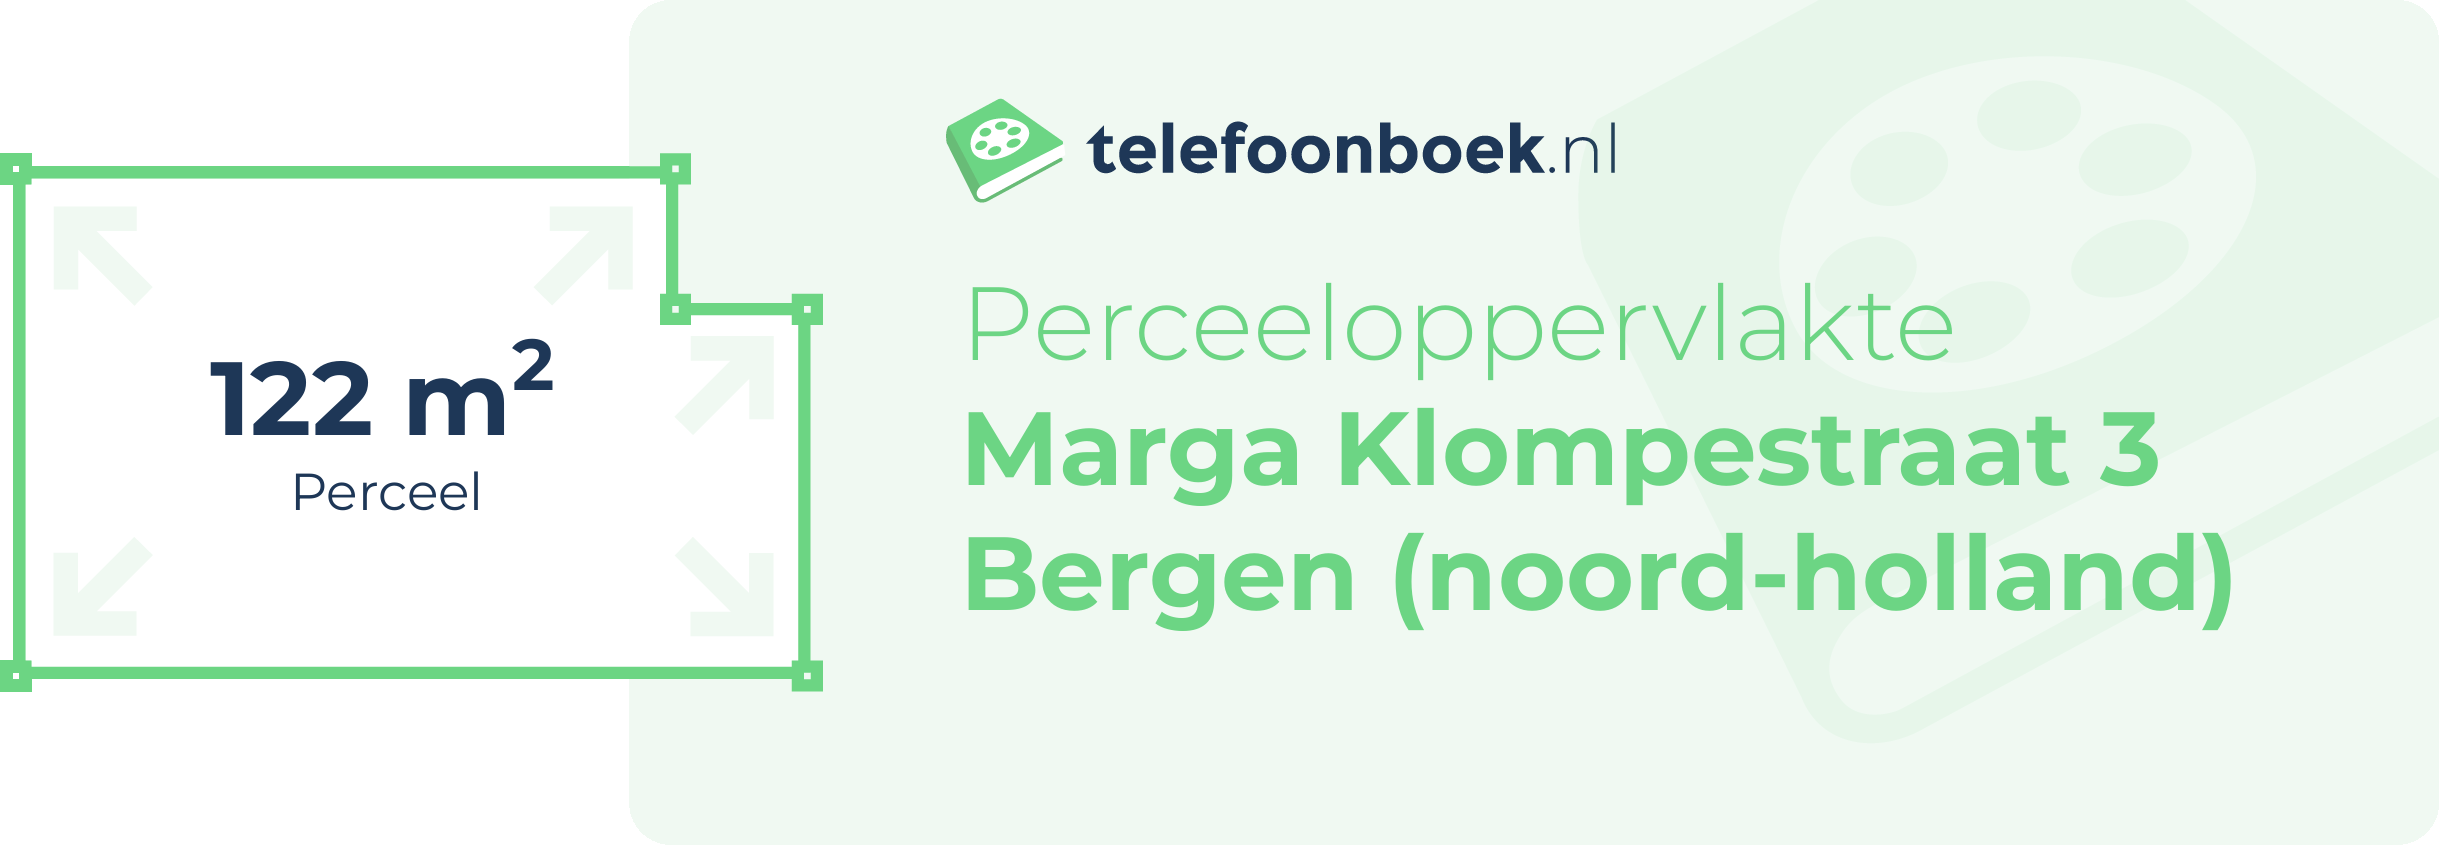 Perceeloppervlakte Marga Klompestraat 3 Bergen (Noord-Holland)